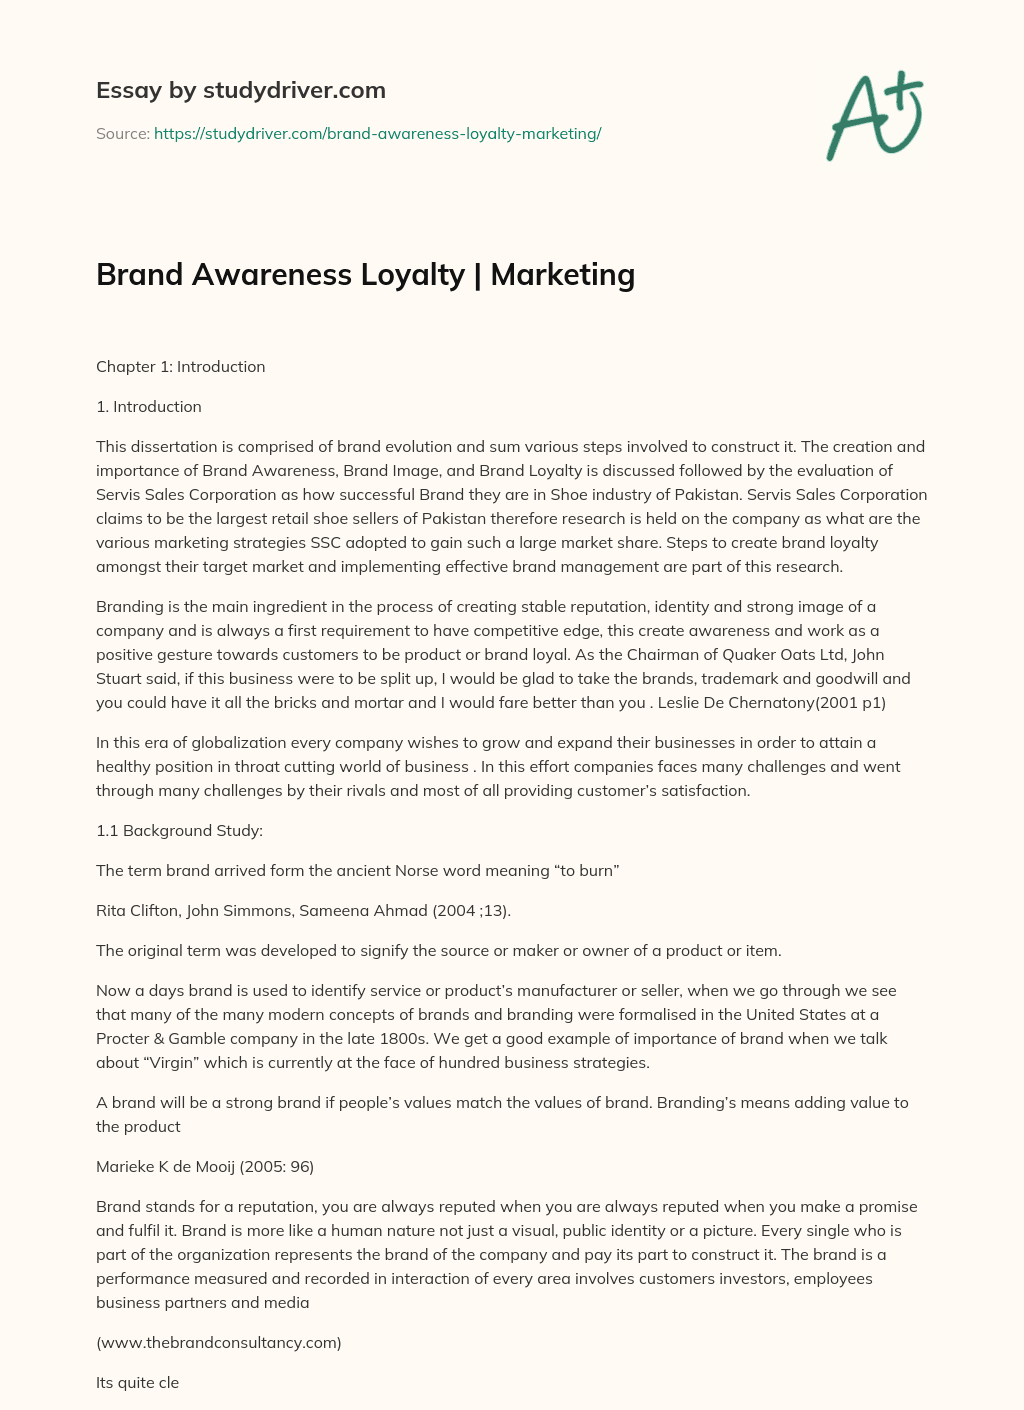 Brand Awareness Loyalty | Marketing essay